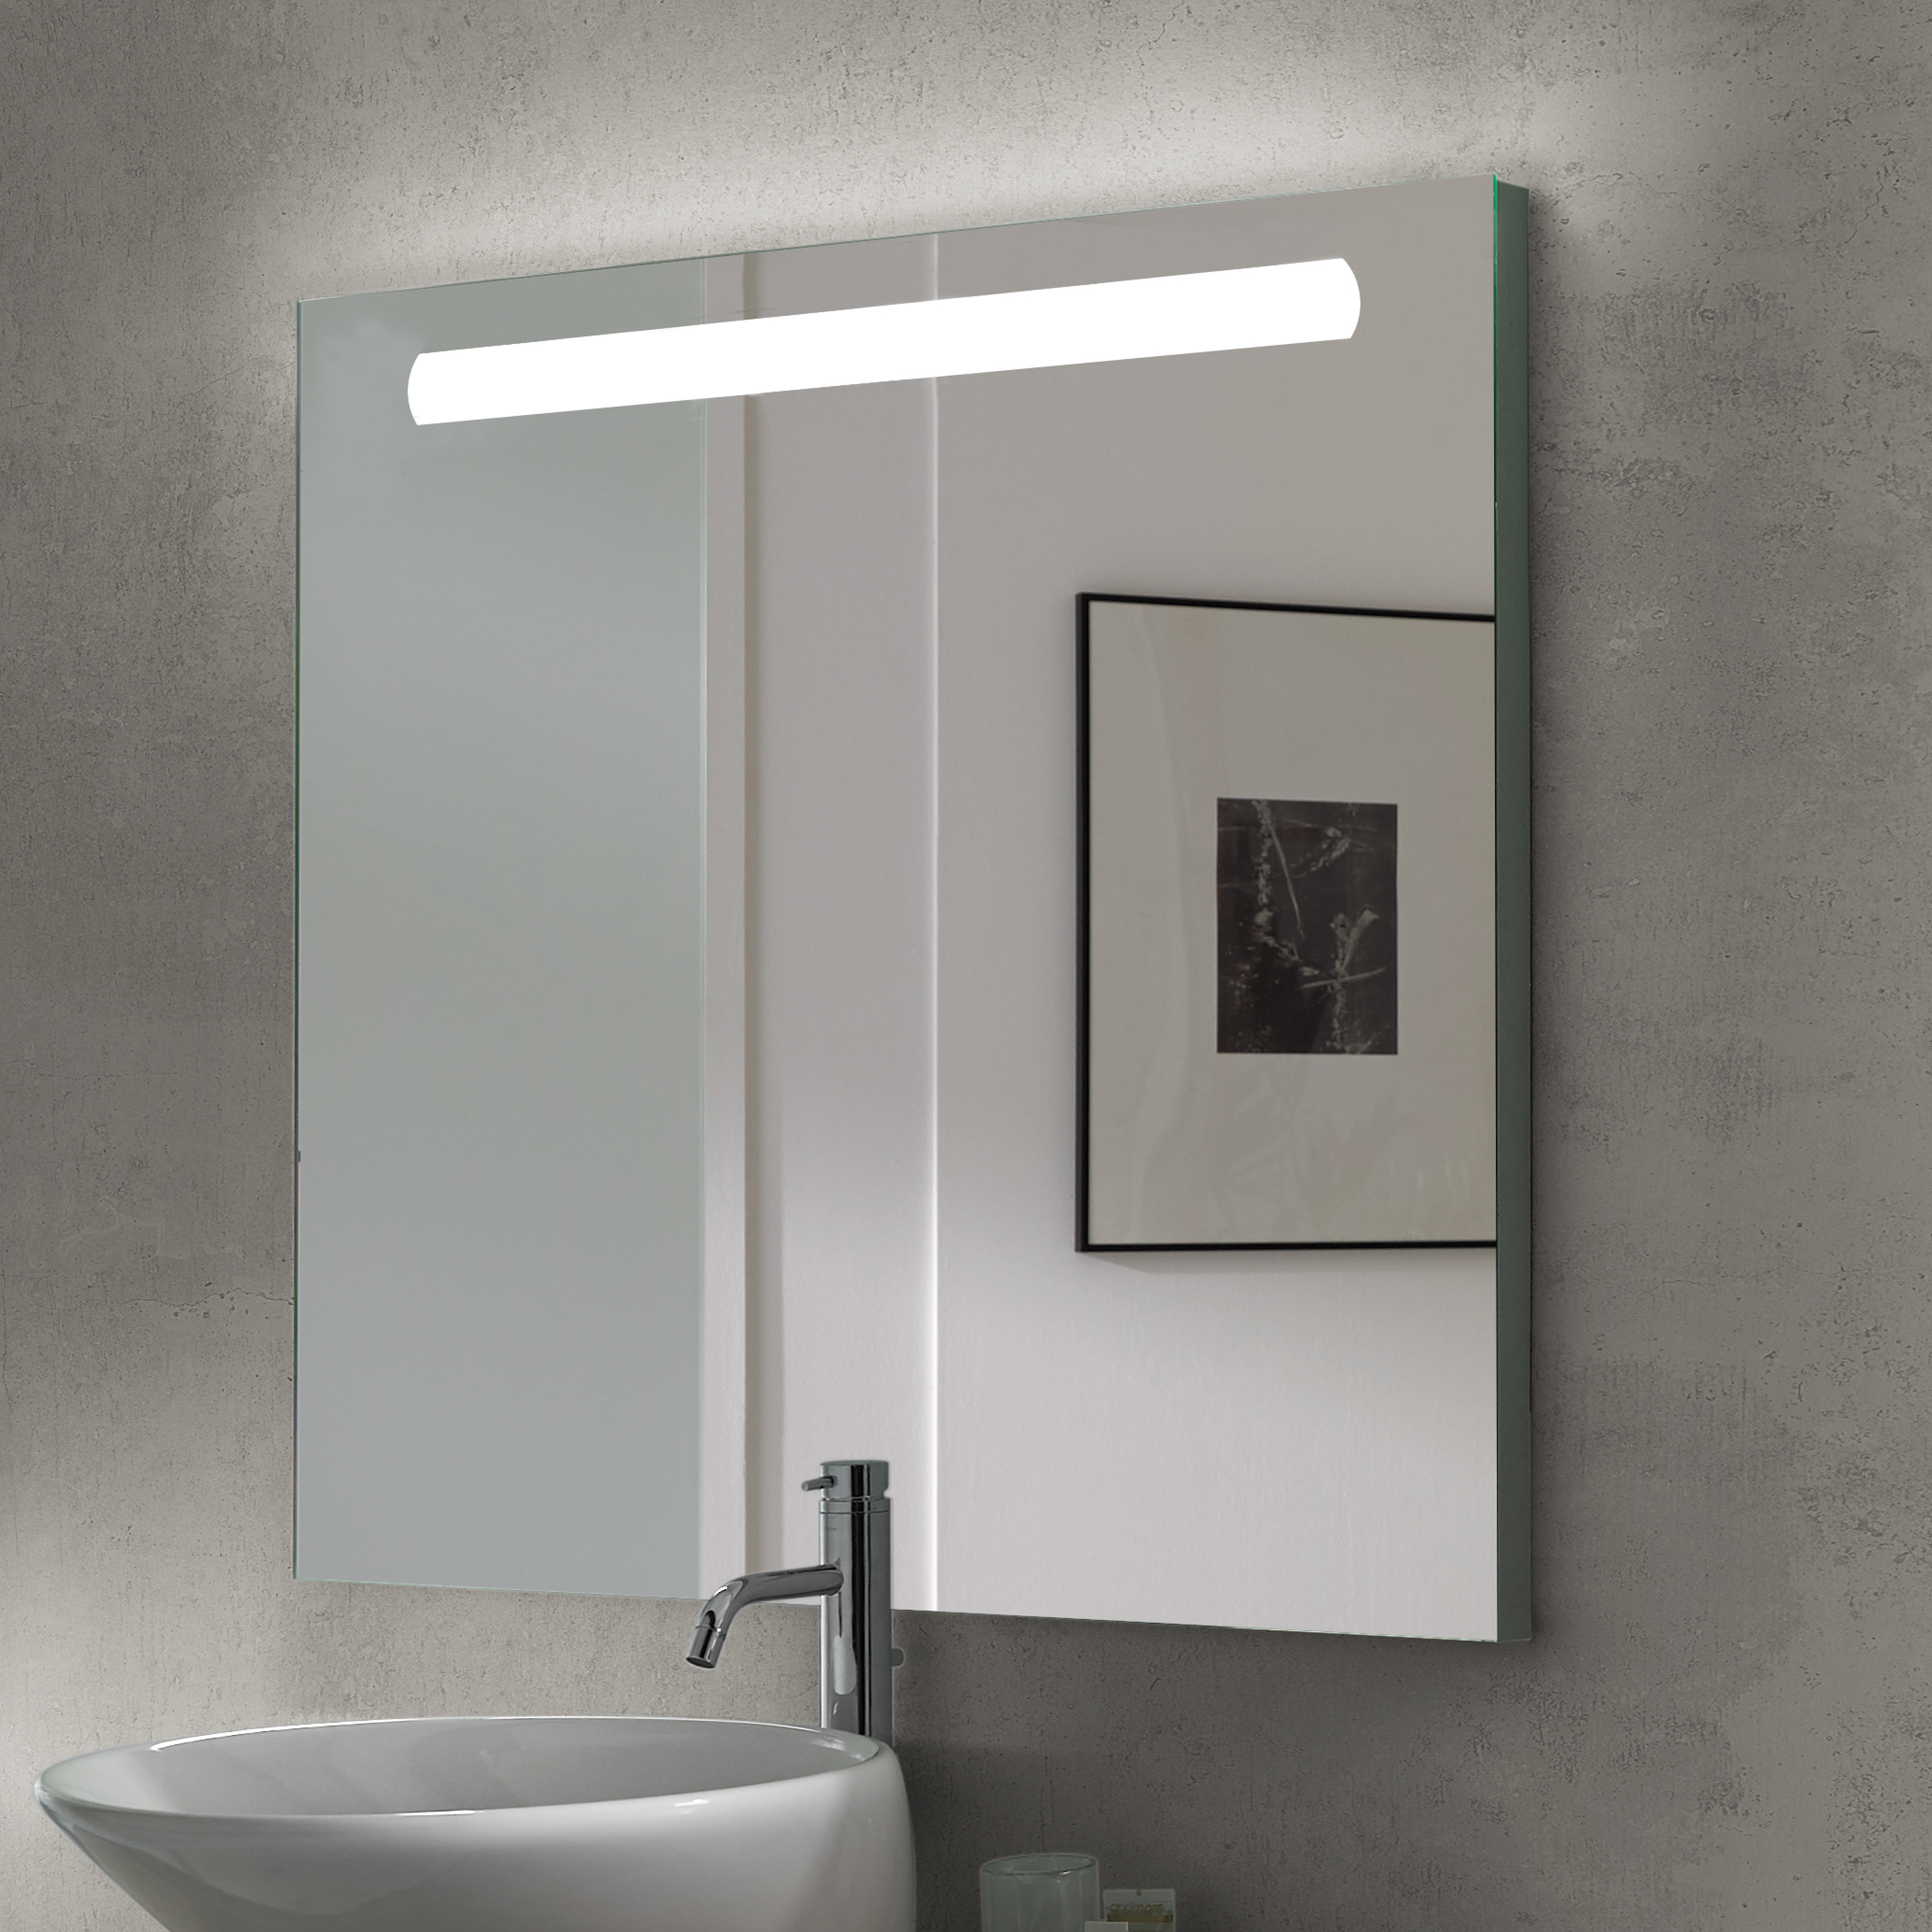  Miroir de salle de bain Pegasus avec eclairage frontal LED, rectangular 600 x 700 mm, AC 230V 50Hz, 6 W, Aluminium et Verre.